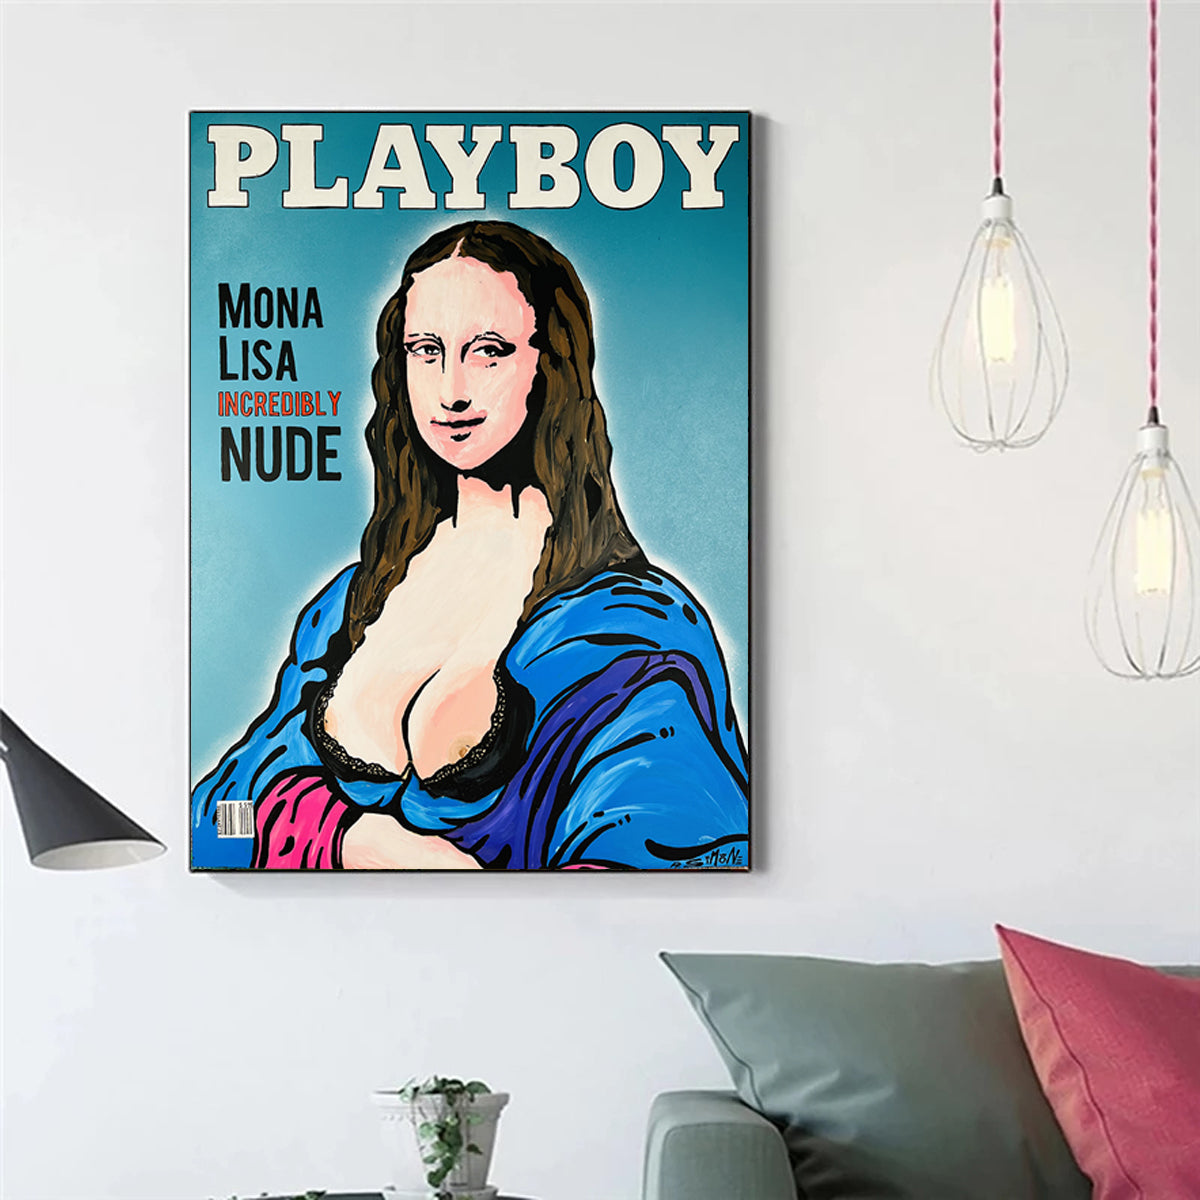 Mona Lisa incredibly nude